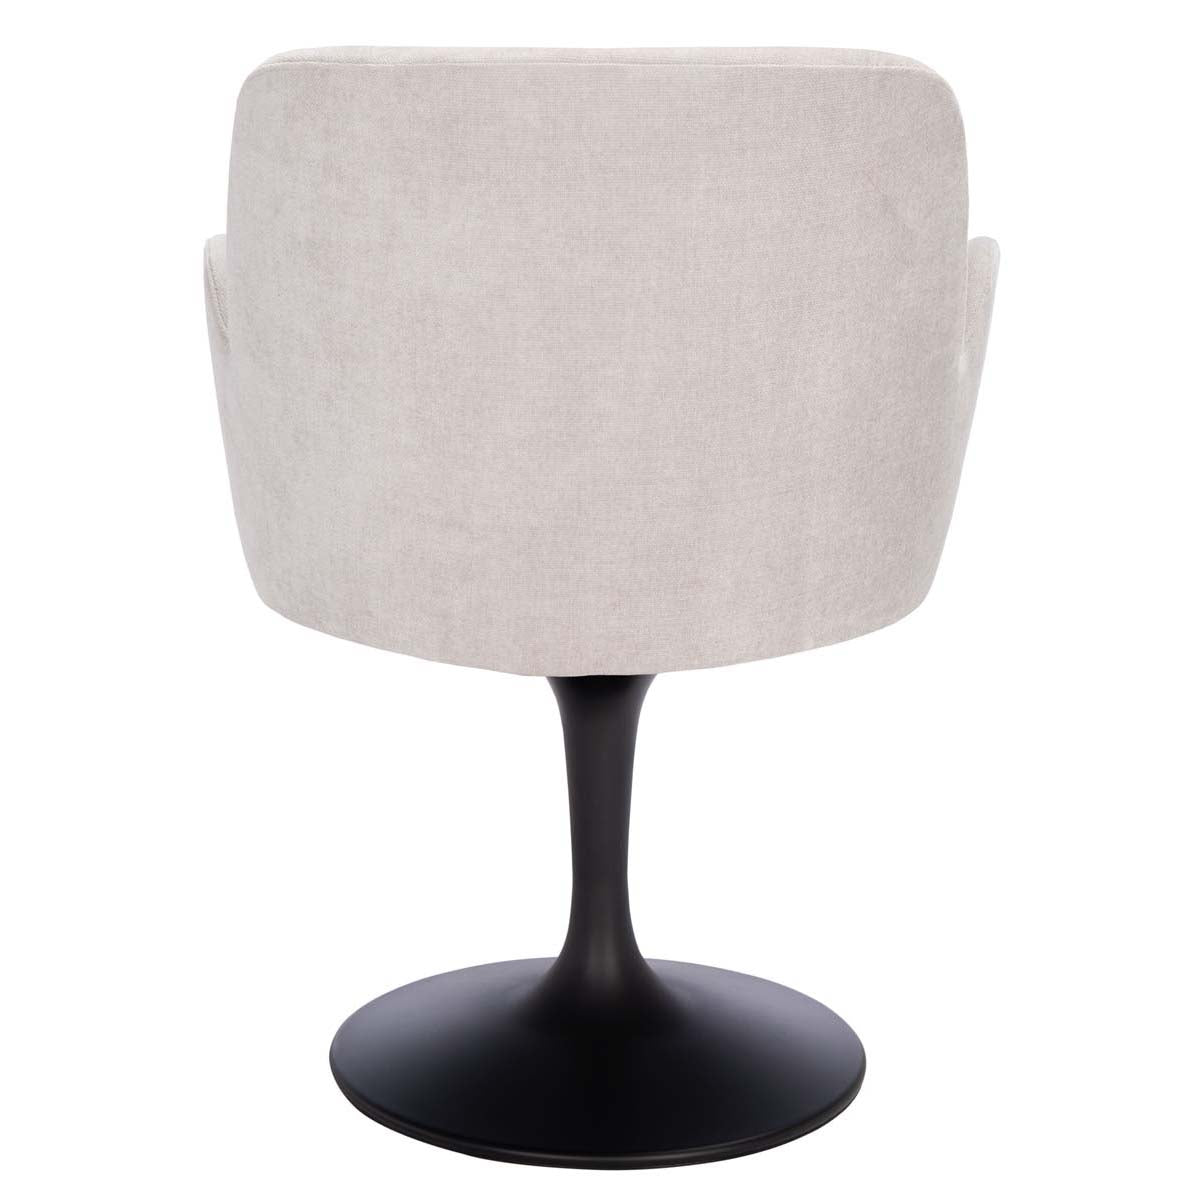 Safavieh Couture Cherith Pedastal Dining Chair - Light Grey / Black